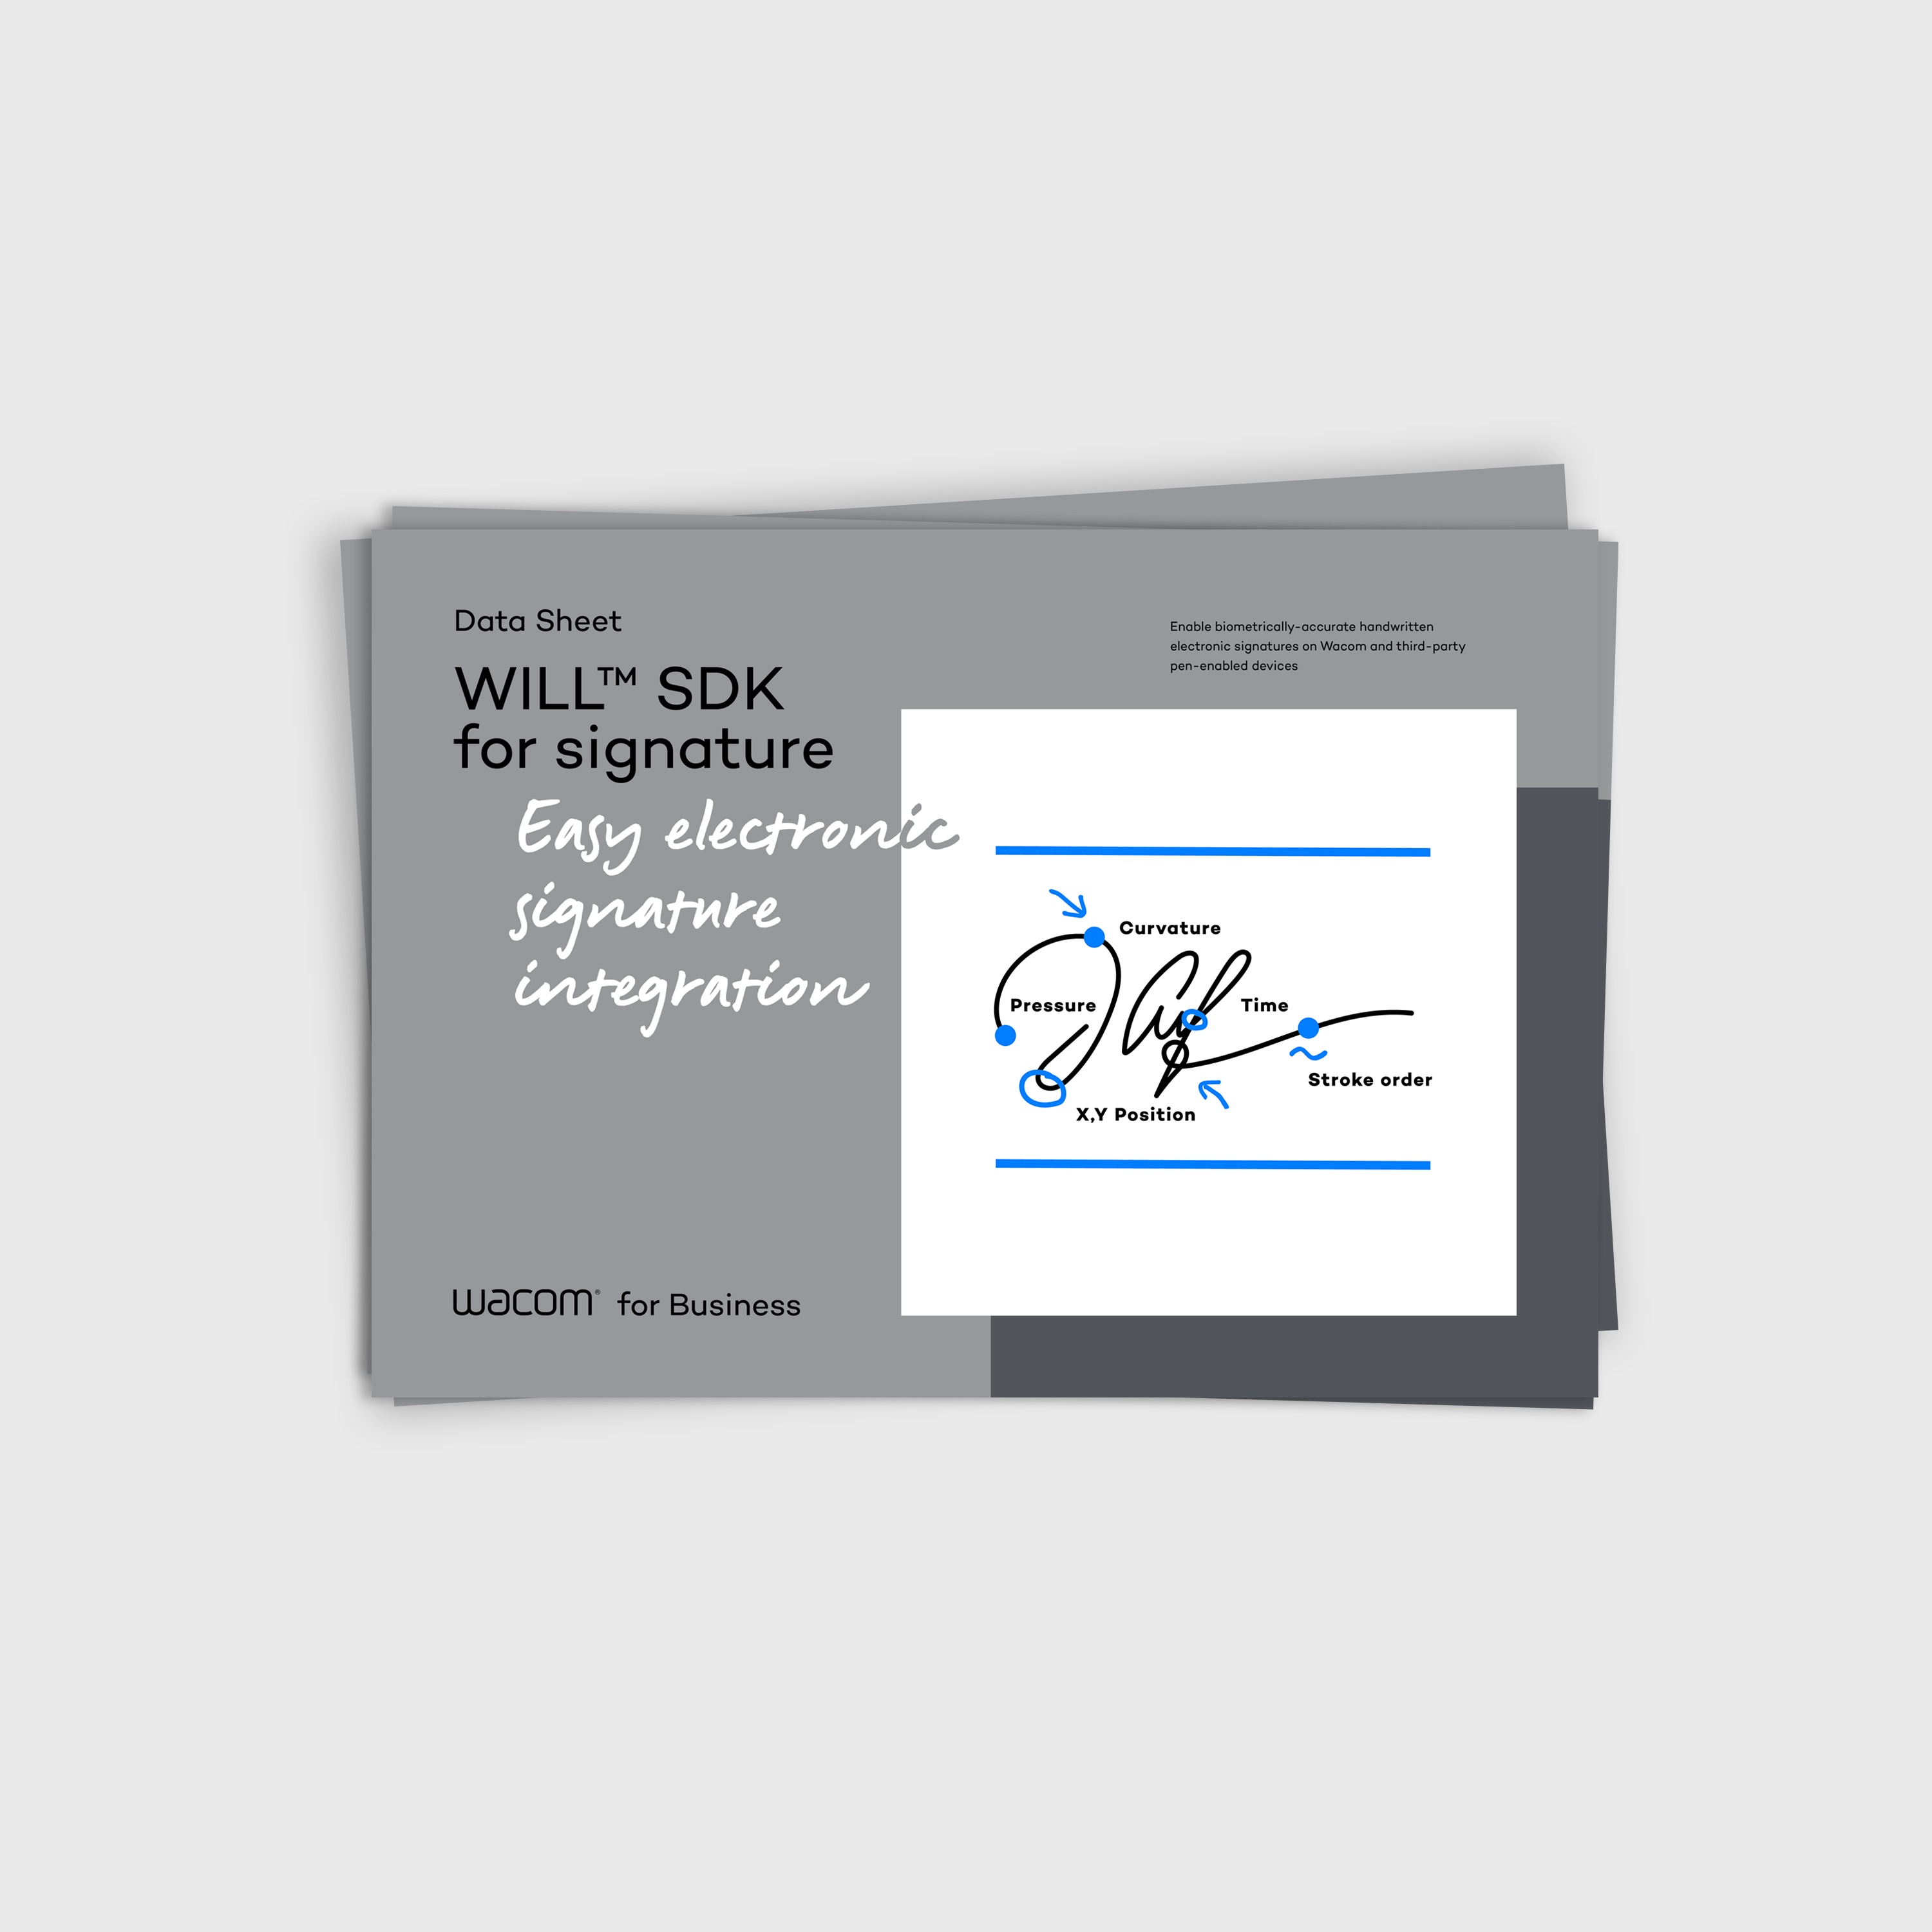 Wacom for Business publications portal Data Sheet WILL SDK for signature